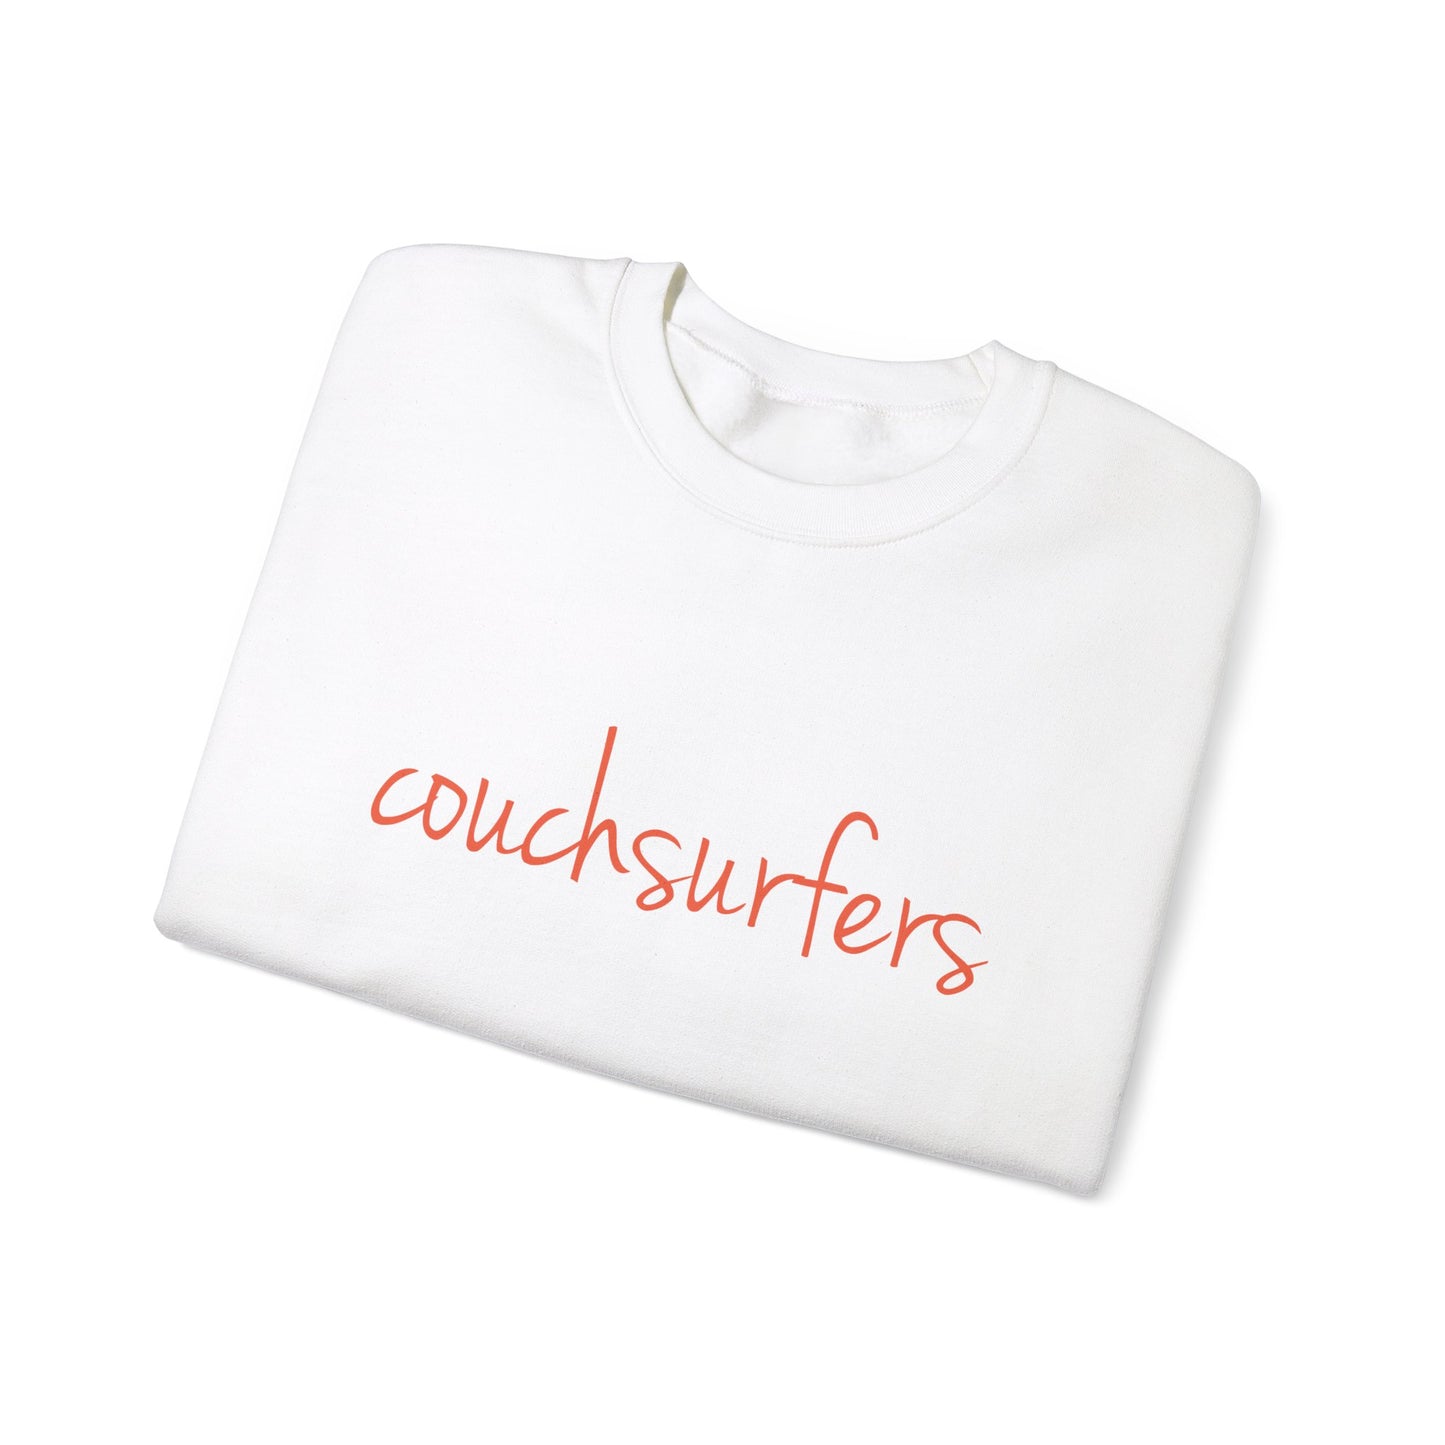 The Couchsurfers Crewneck Sweatshirt